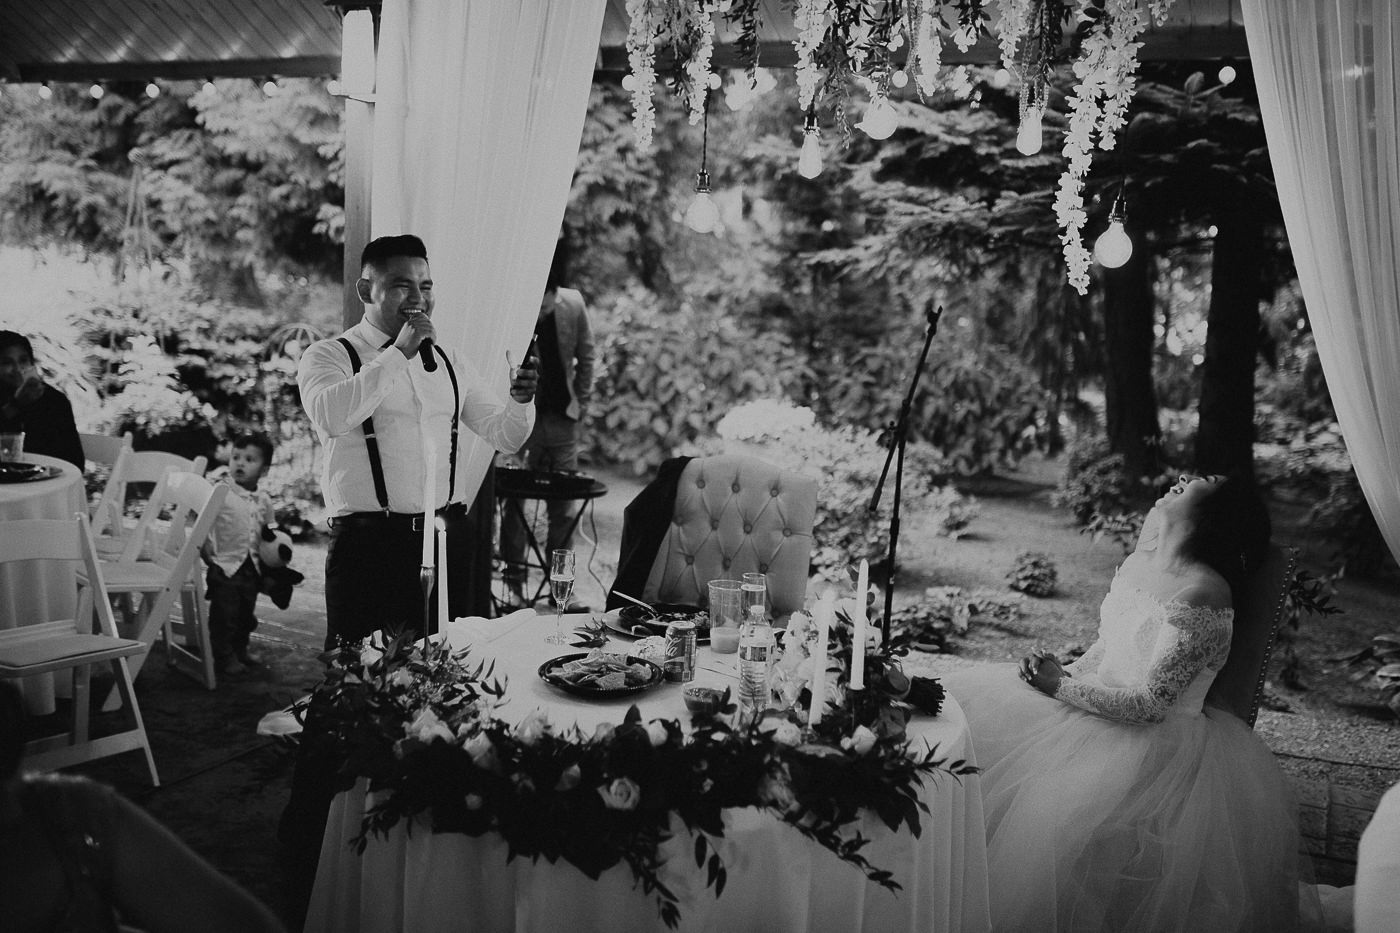  Seattle Wedding Photographer - - Evergreen Gardens, Arlington, WA - Seattle Engagement Photographer - Seattle Elopement Photographer - Arlington Wedding Photographer - Tacoma Wedding - Photographer - Bellevue Wedding Photographer - Wenatchee Wedding